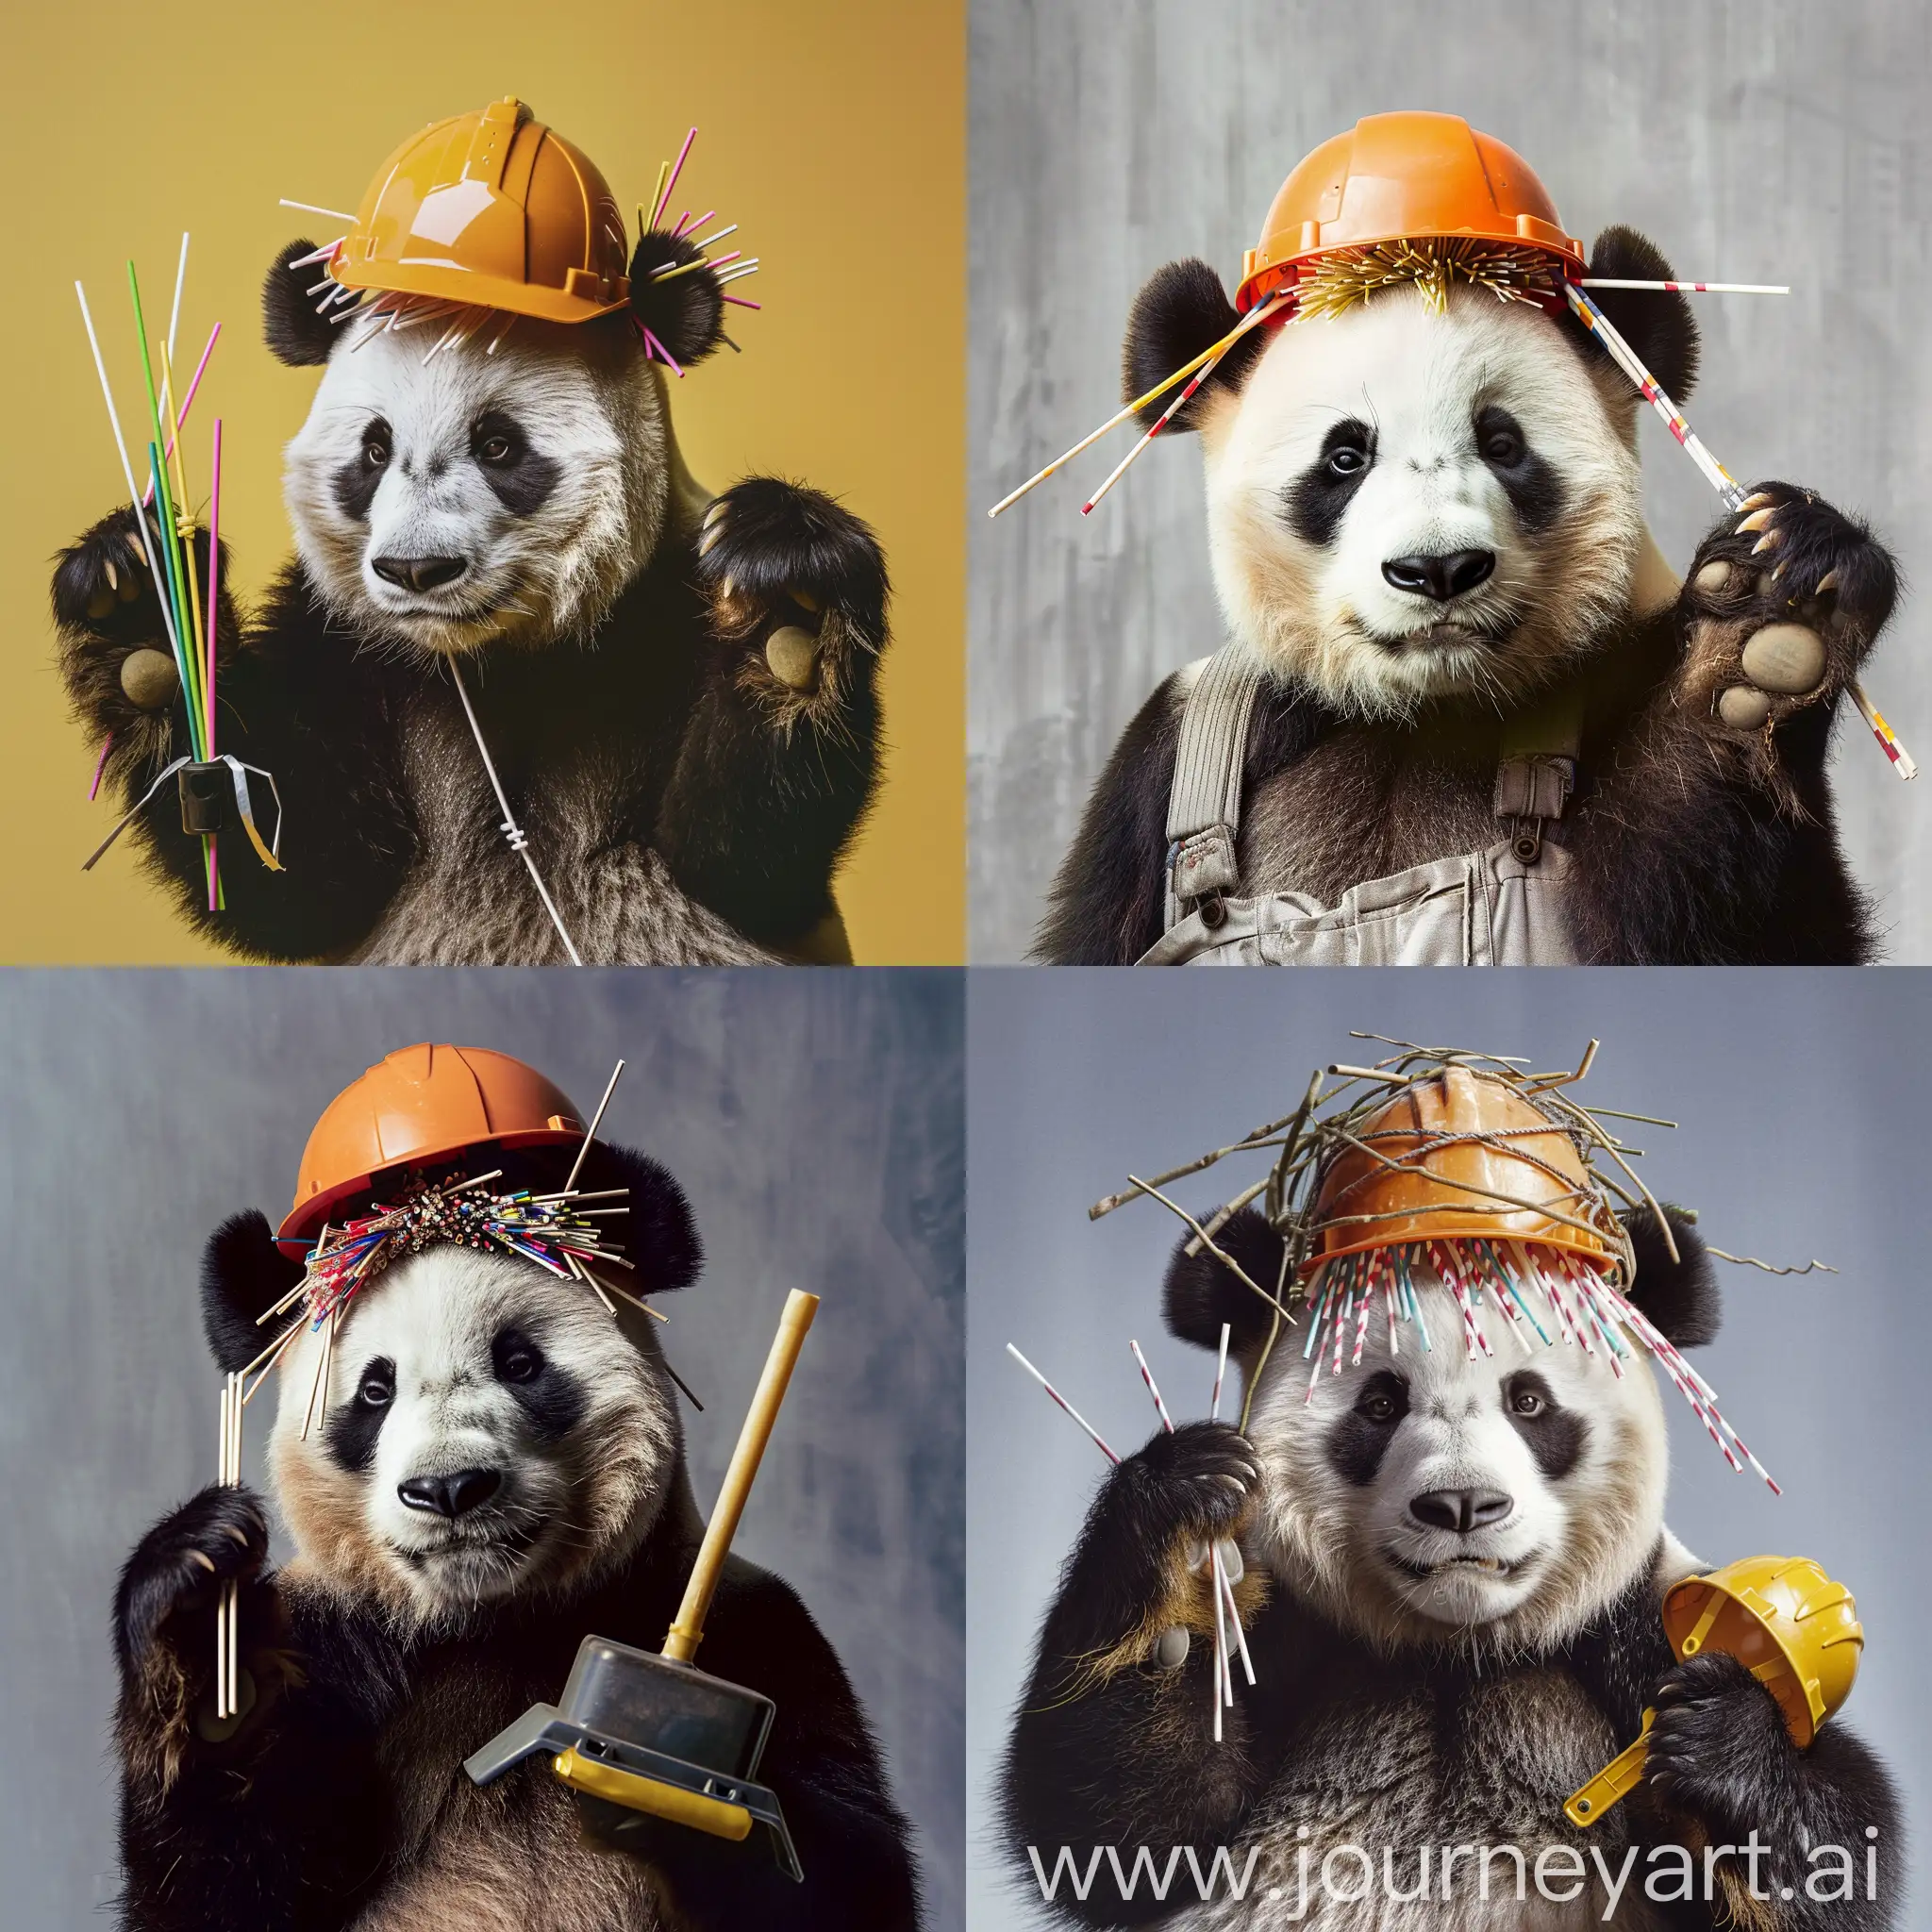 Playful-Panda-Engineer-with-Straws-and-Hard-Hat